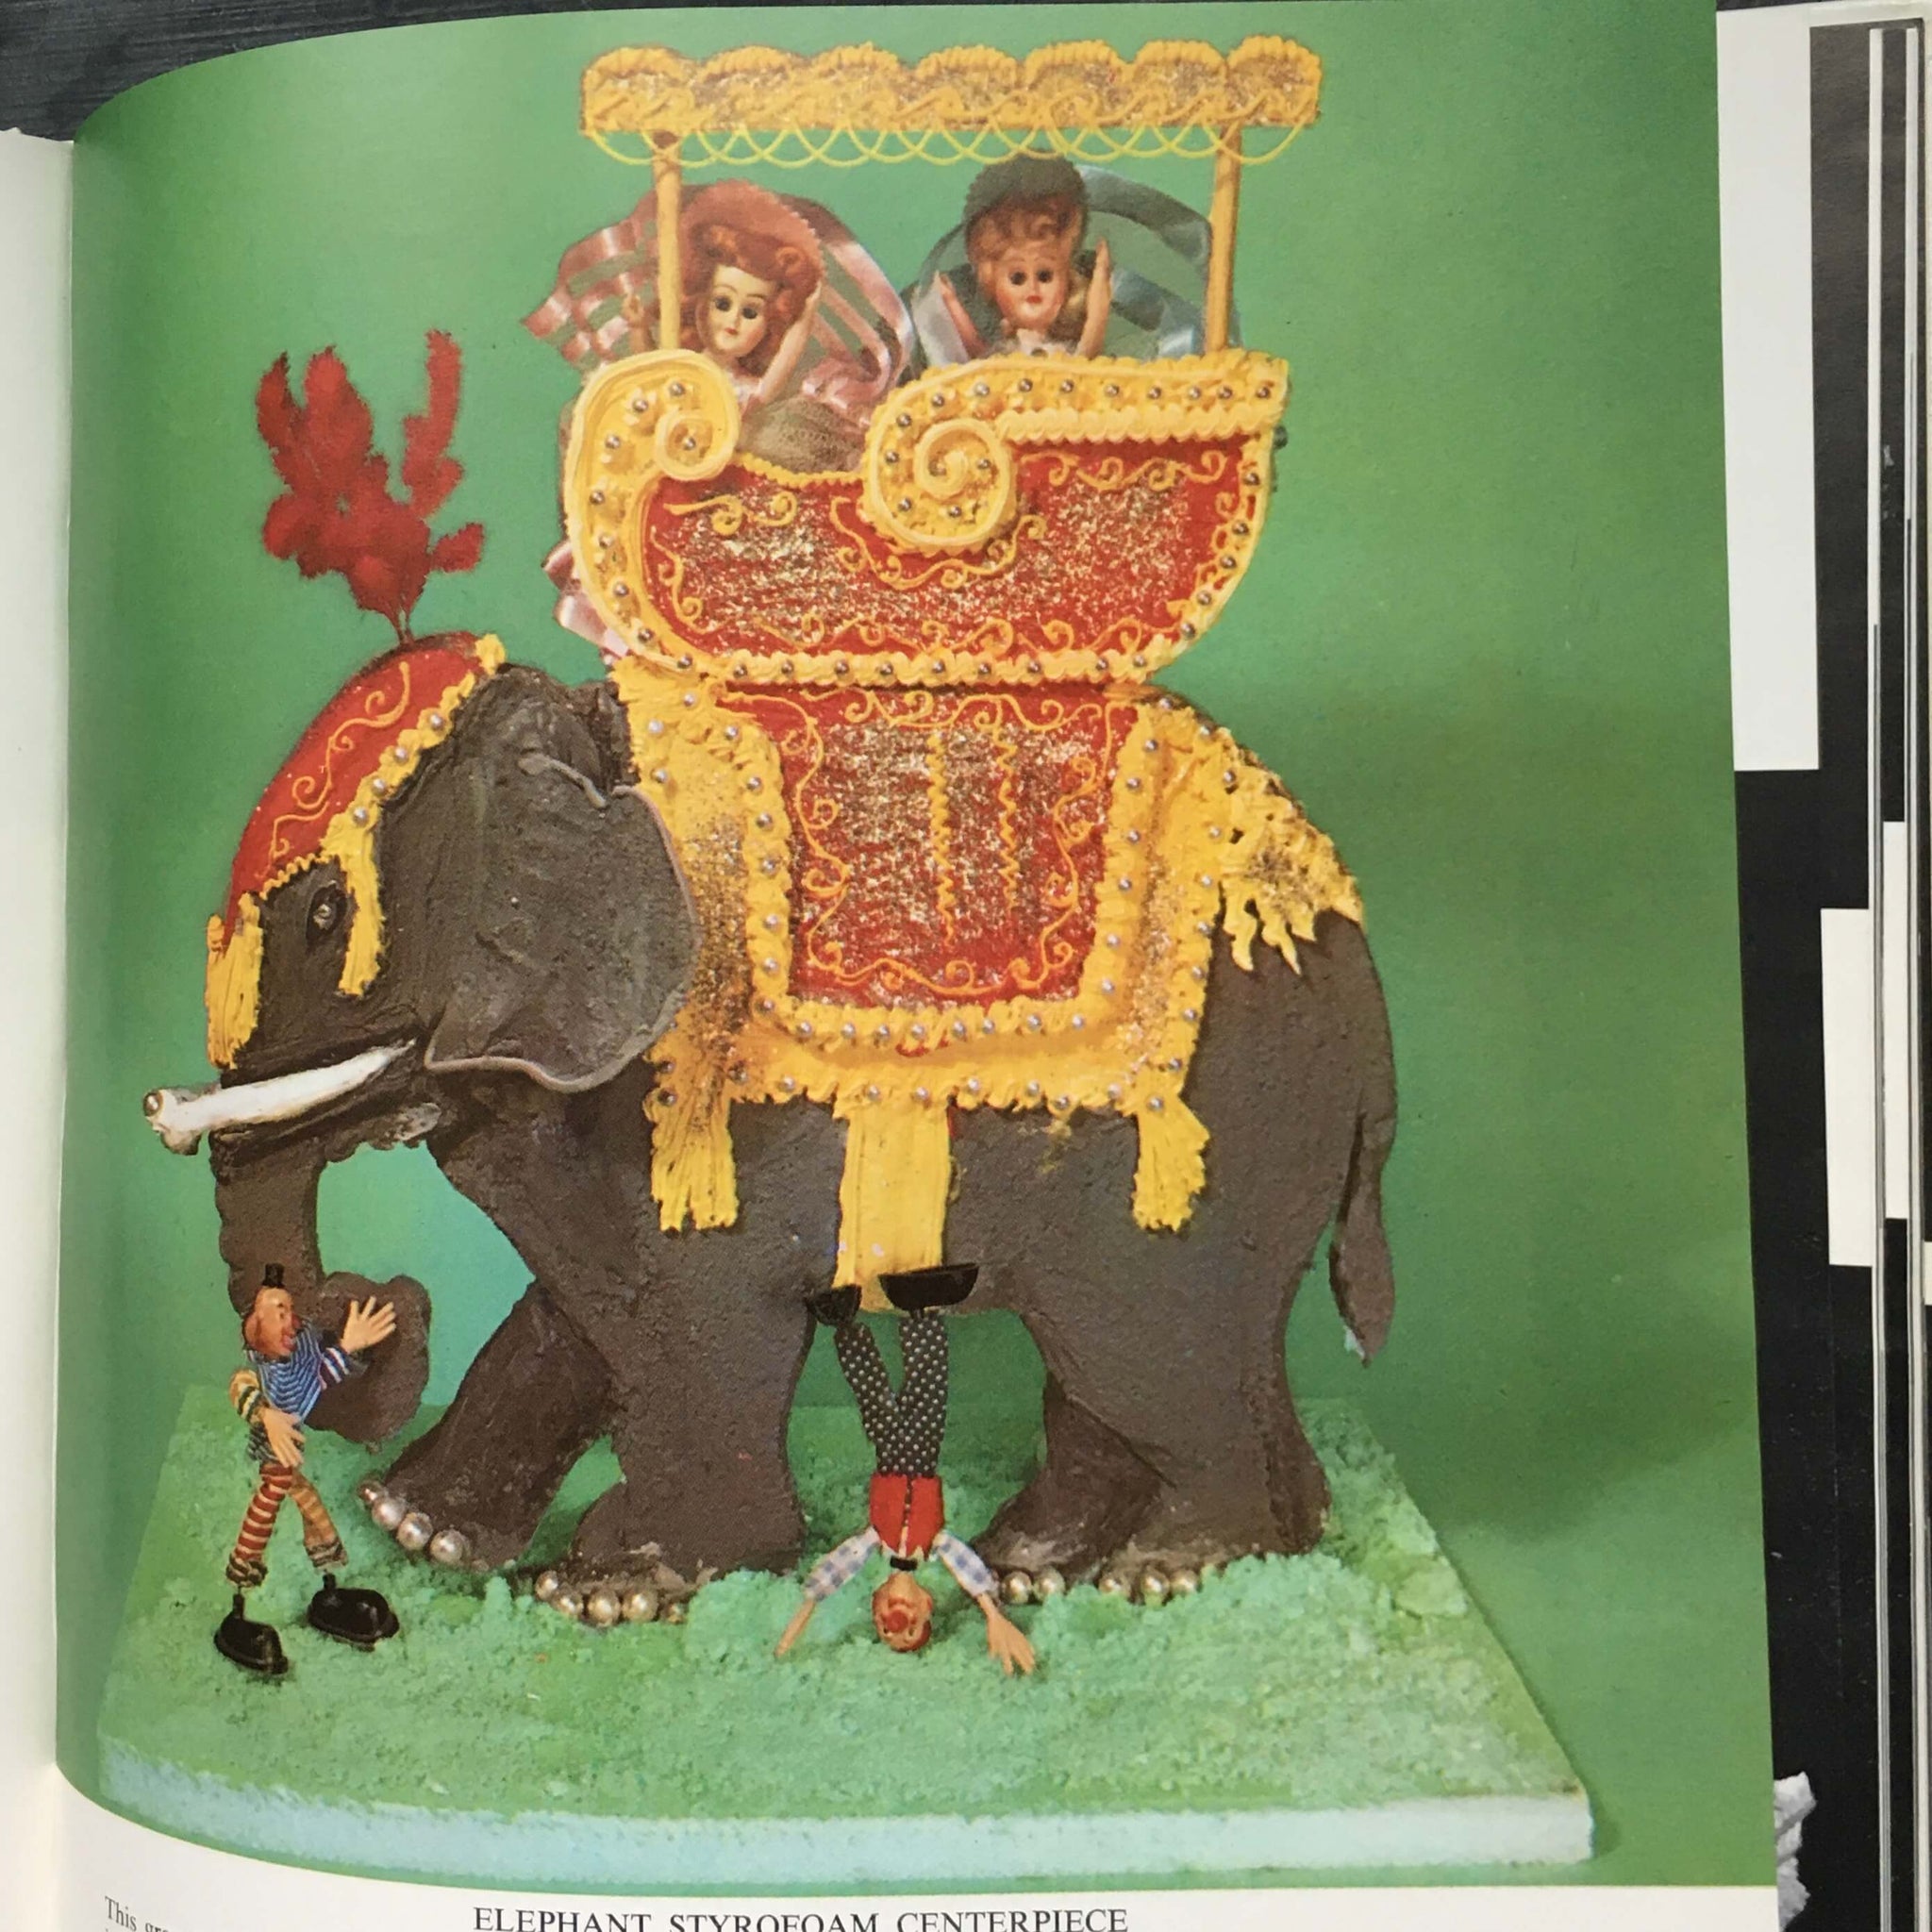 Wilton's Wonderland of Cake Decorating - 1964 Edition, Second Printing - McKinley Wilton and Norman Wilton